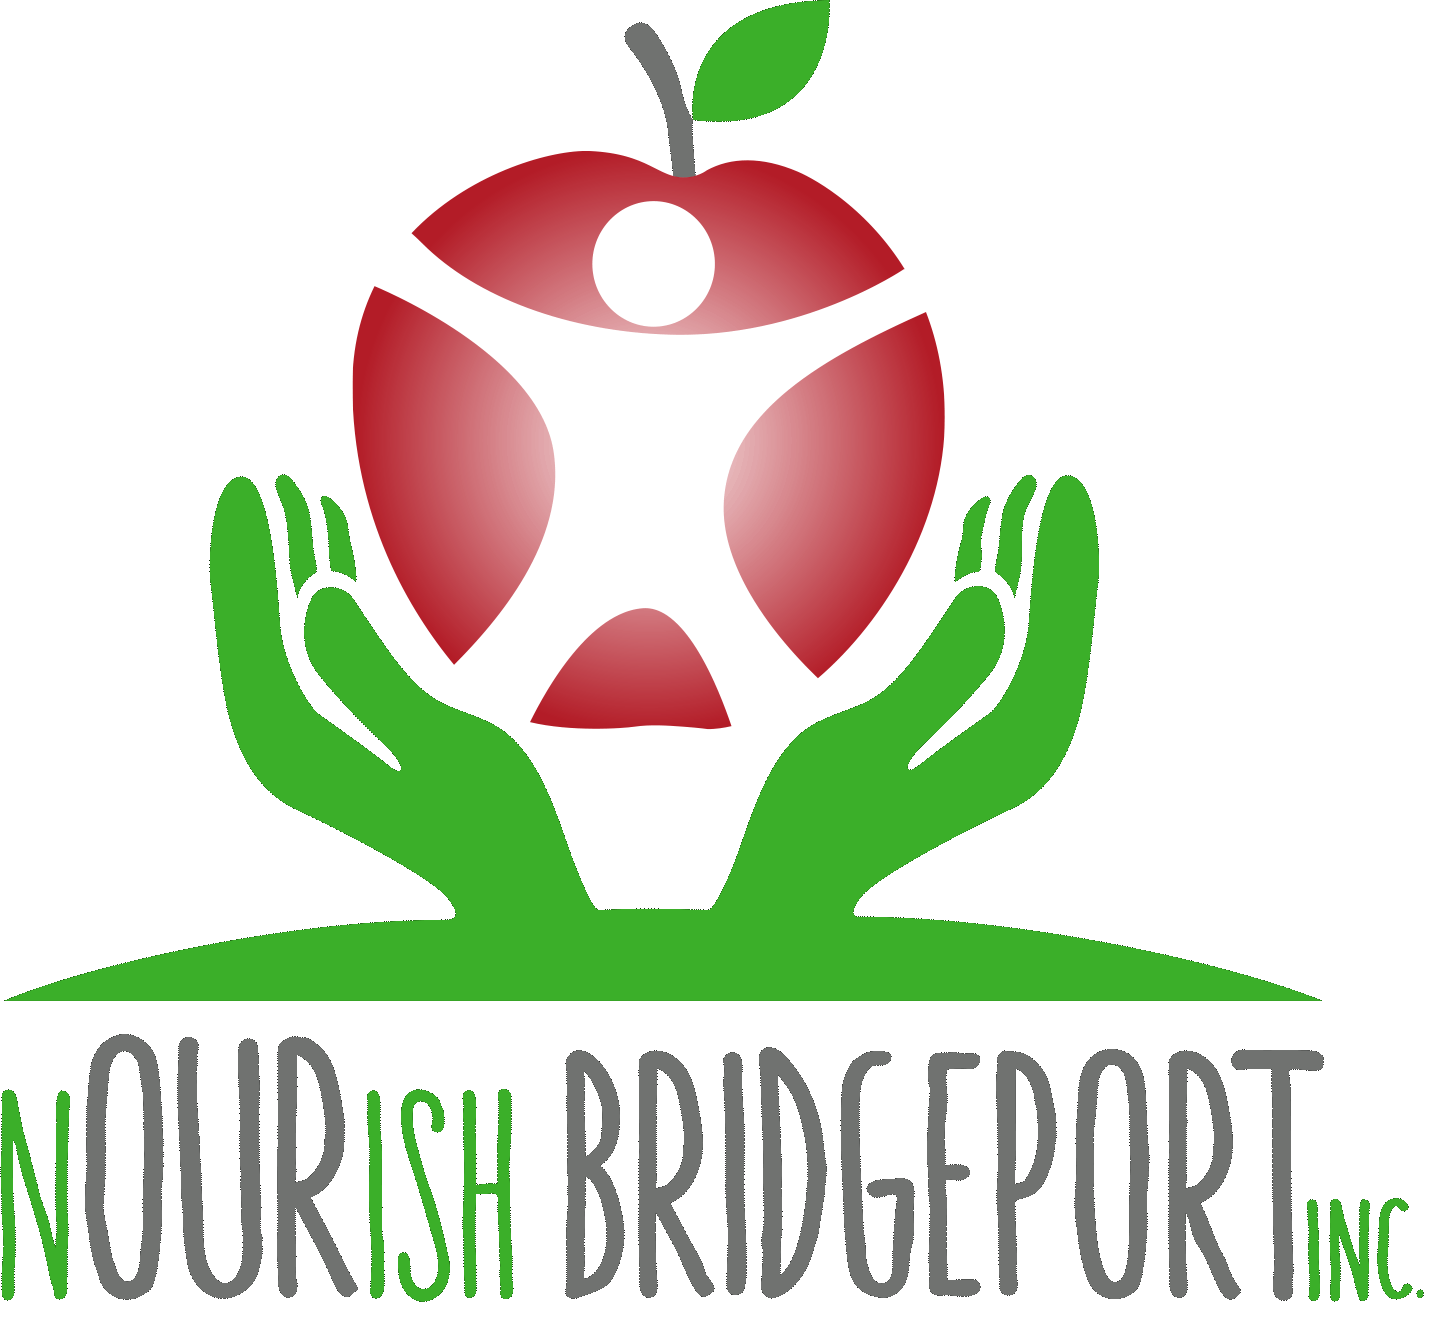 nOURish BRIDGEPORT Inc